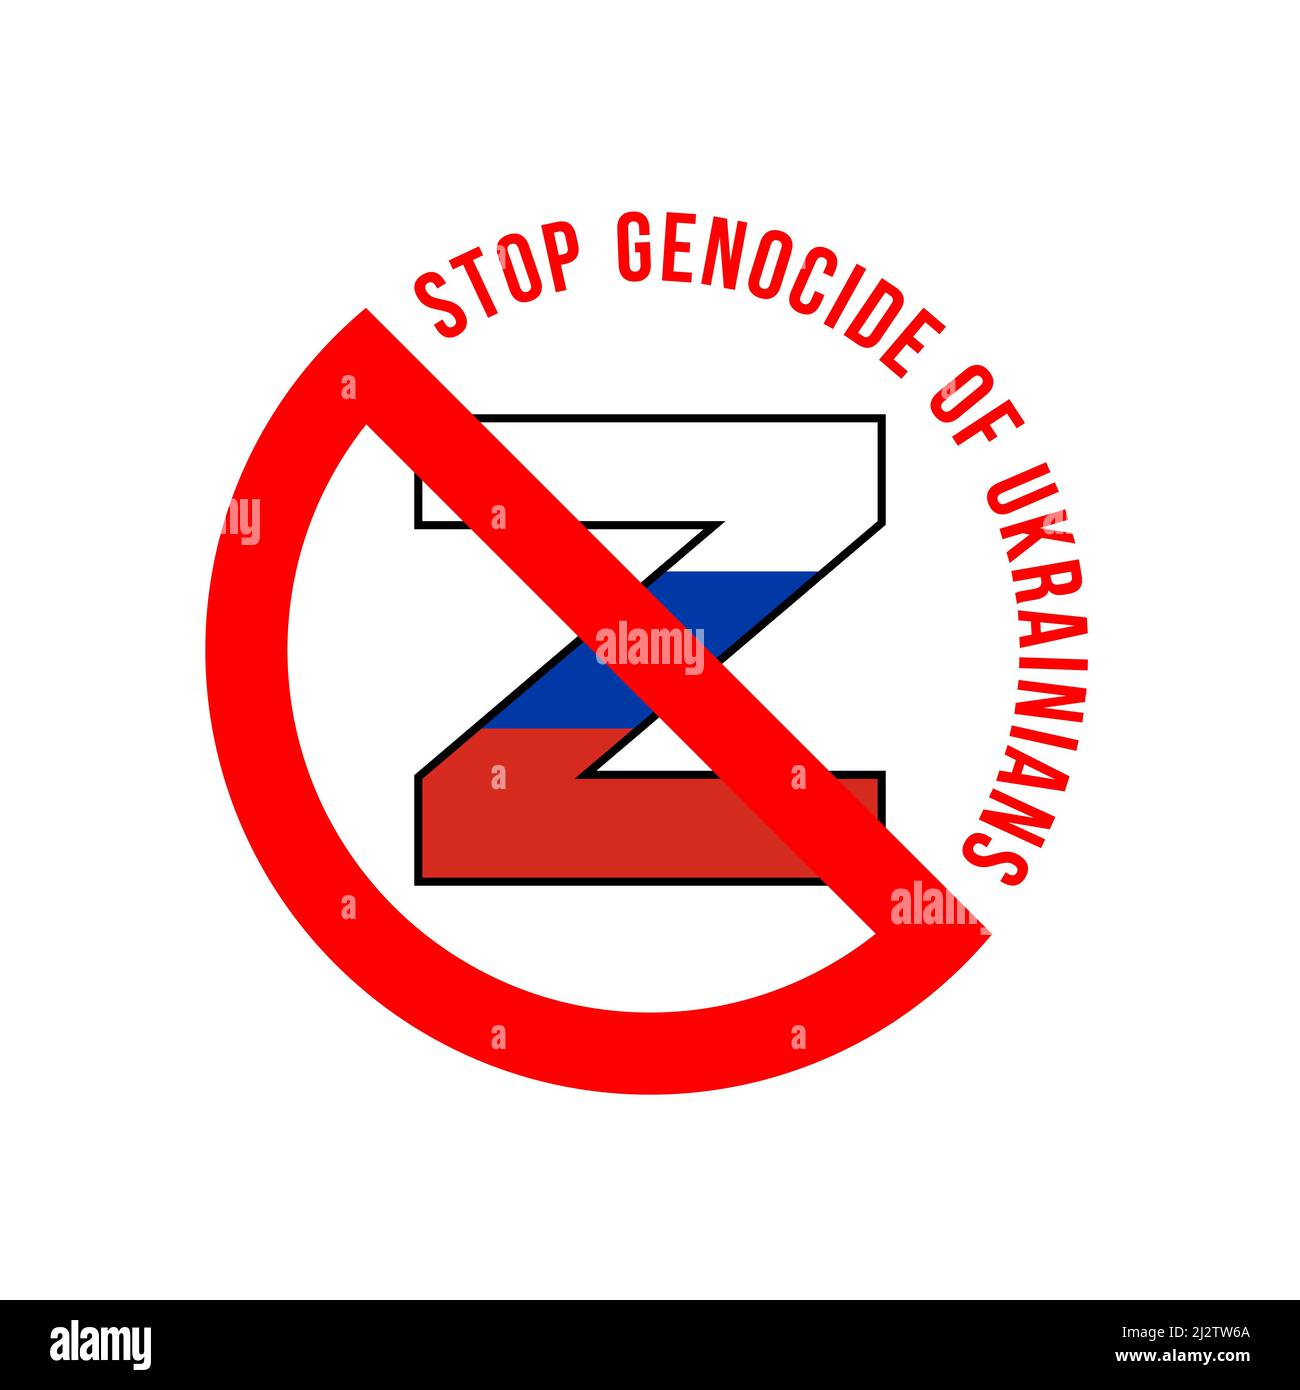 Stop genocide of Ukrainians. Z symbol inside prohibition sign Stock Vector